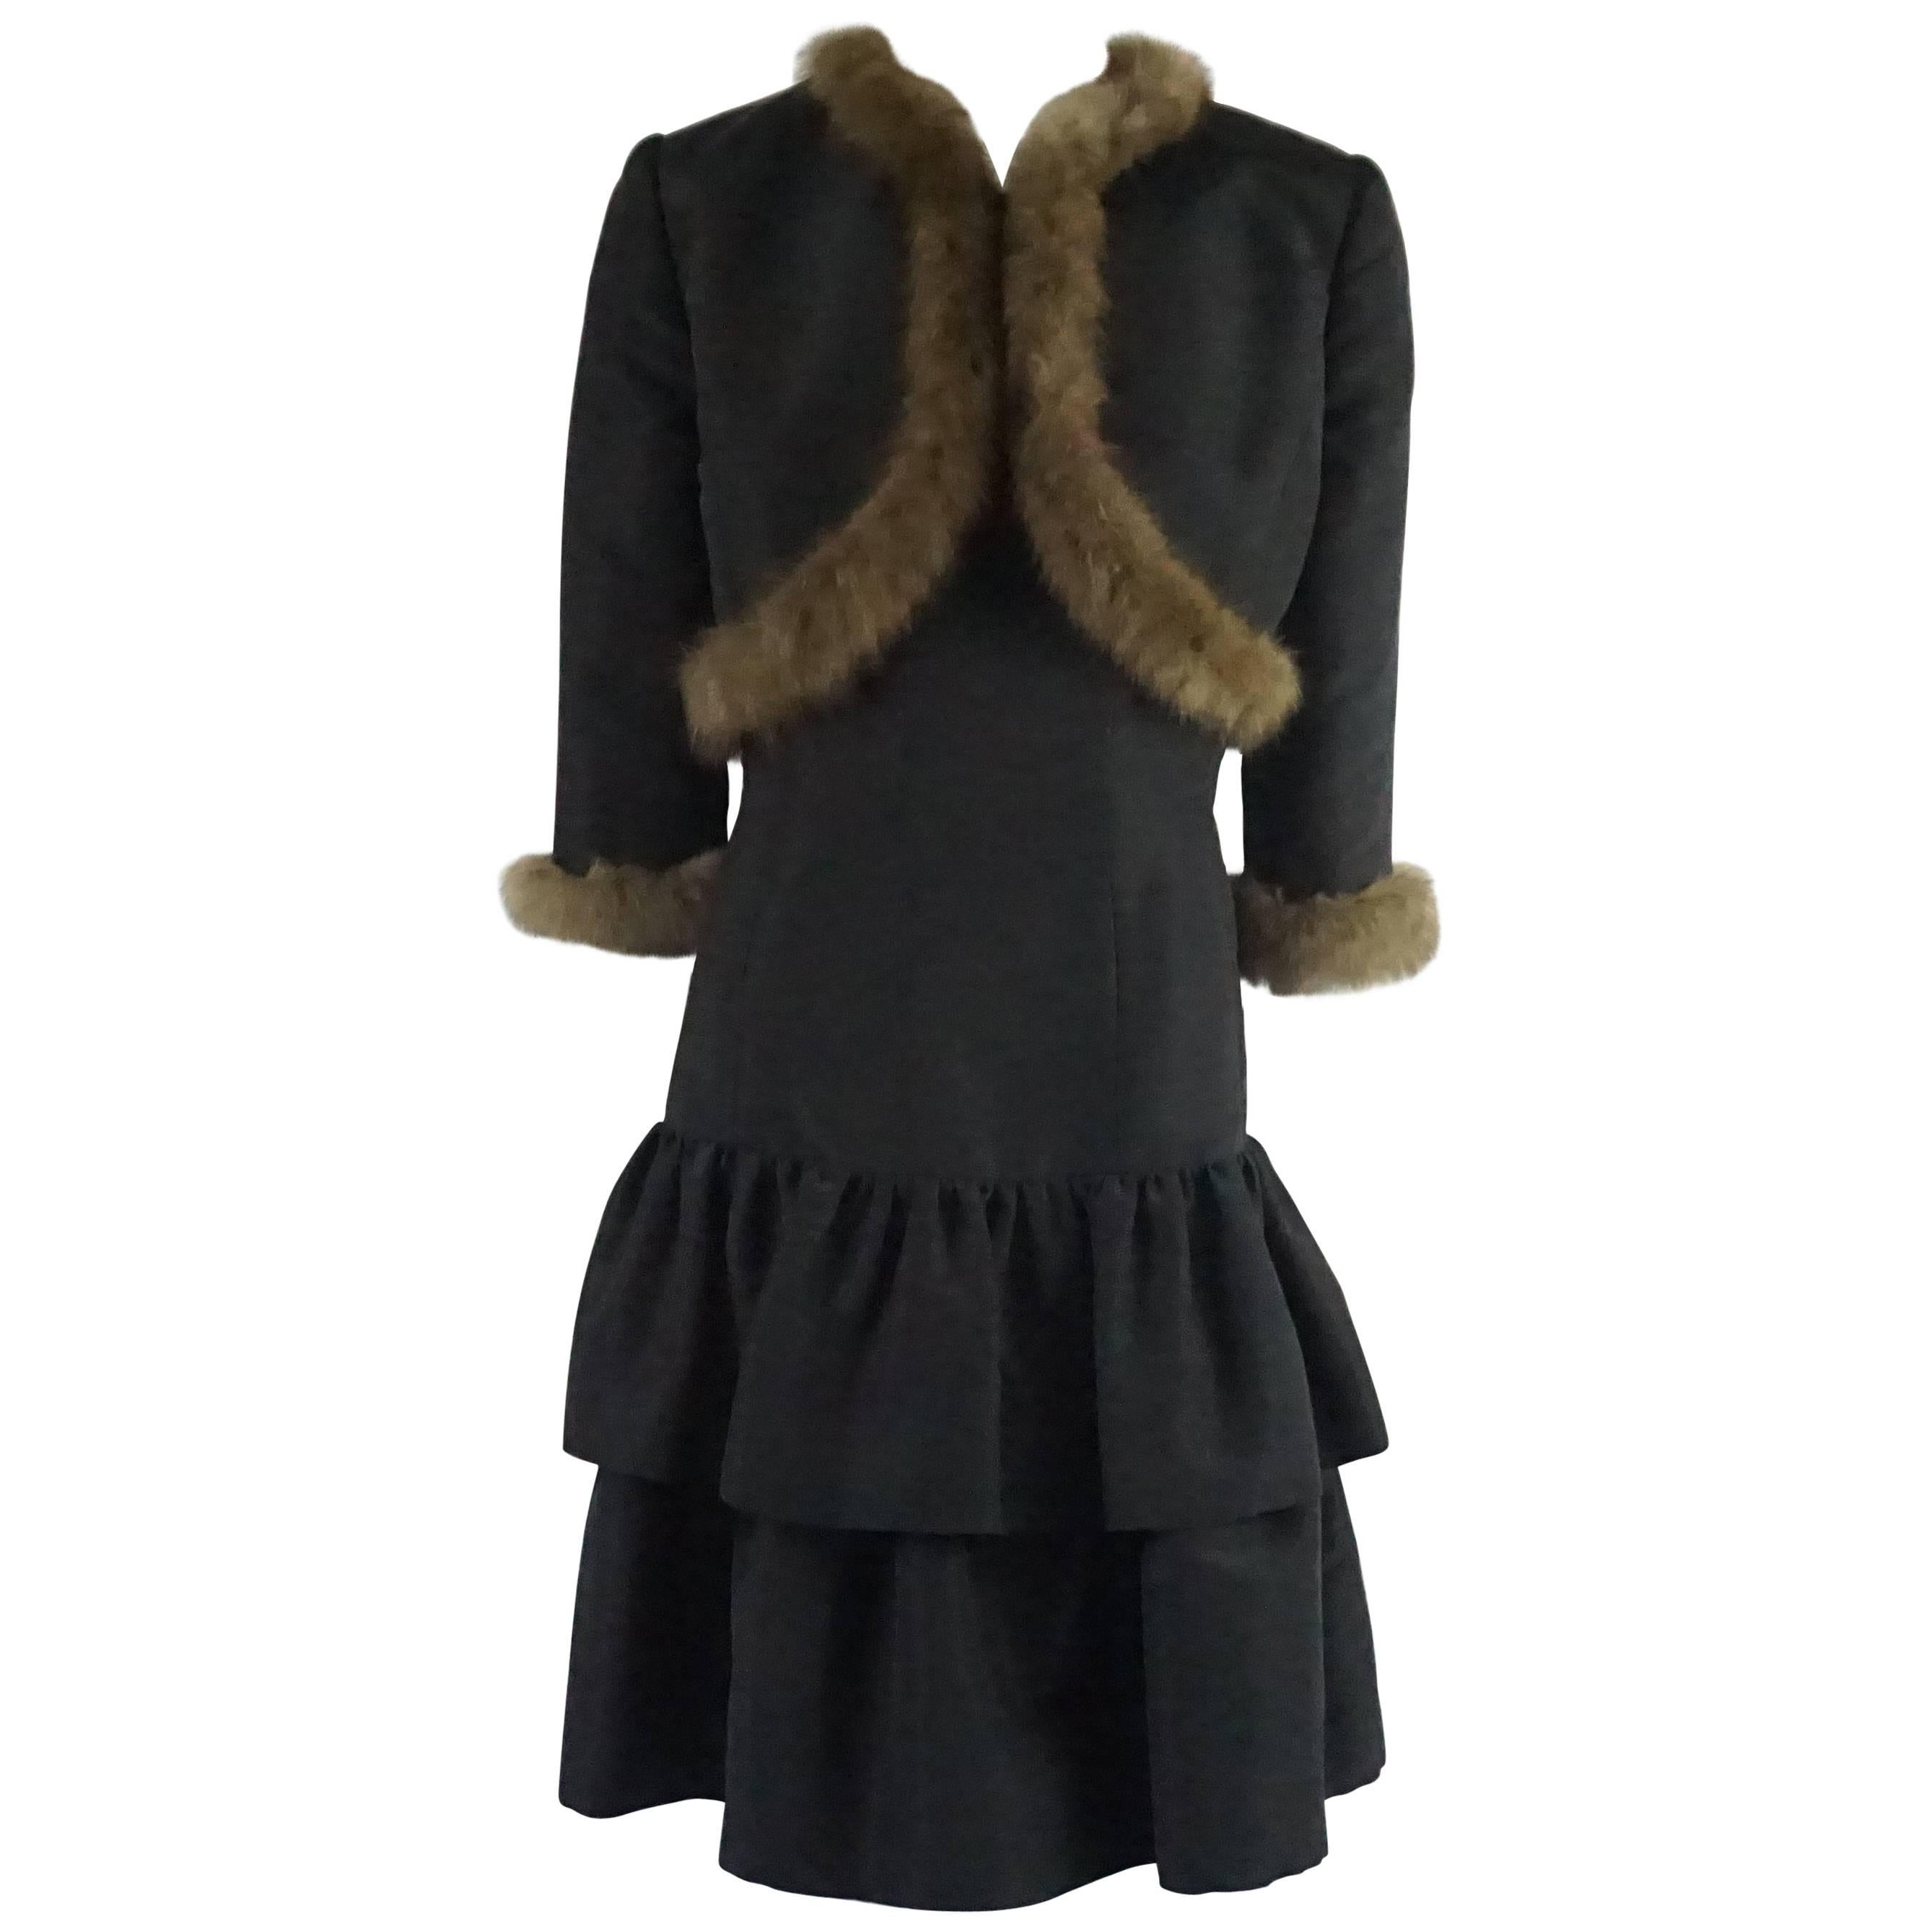 Oscar de la Renta Black Taffeta Dress and Jacket with Sable Trim - 10 For Sale